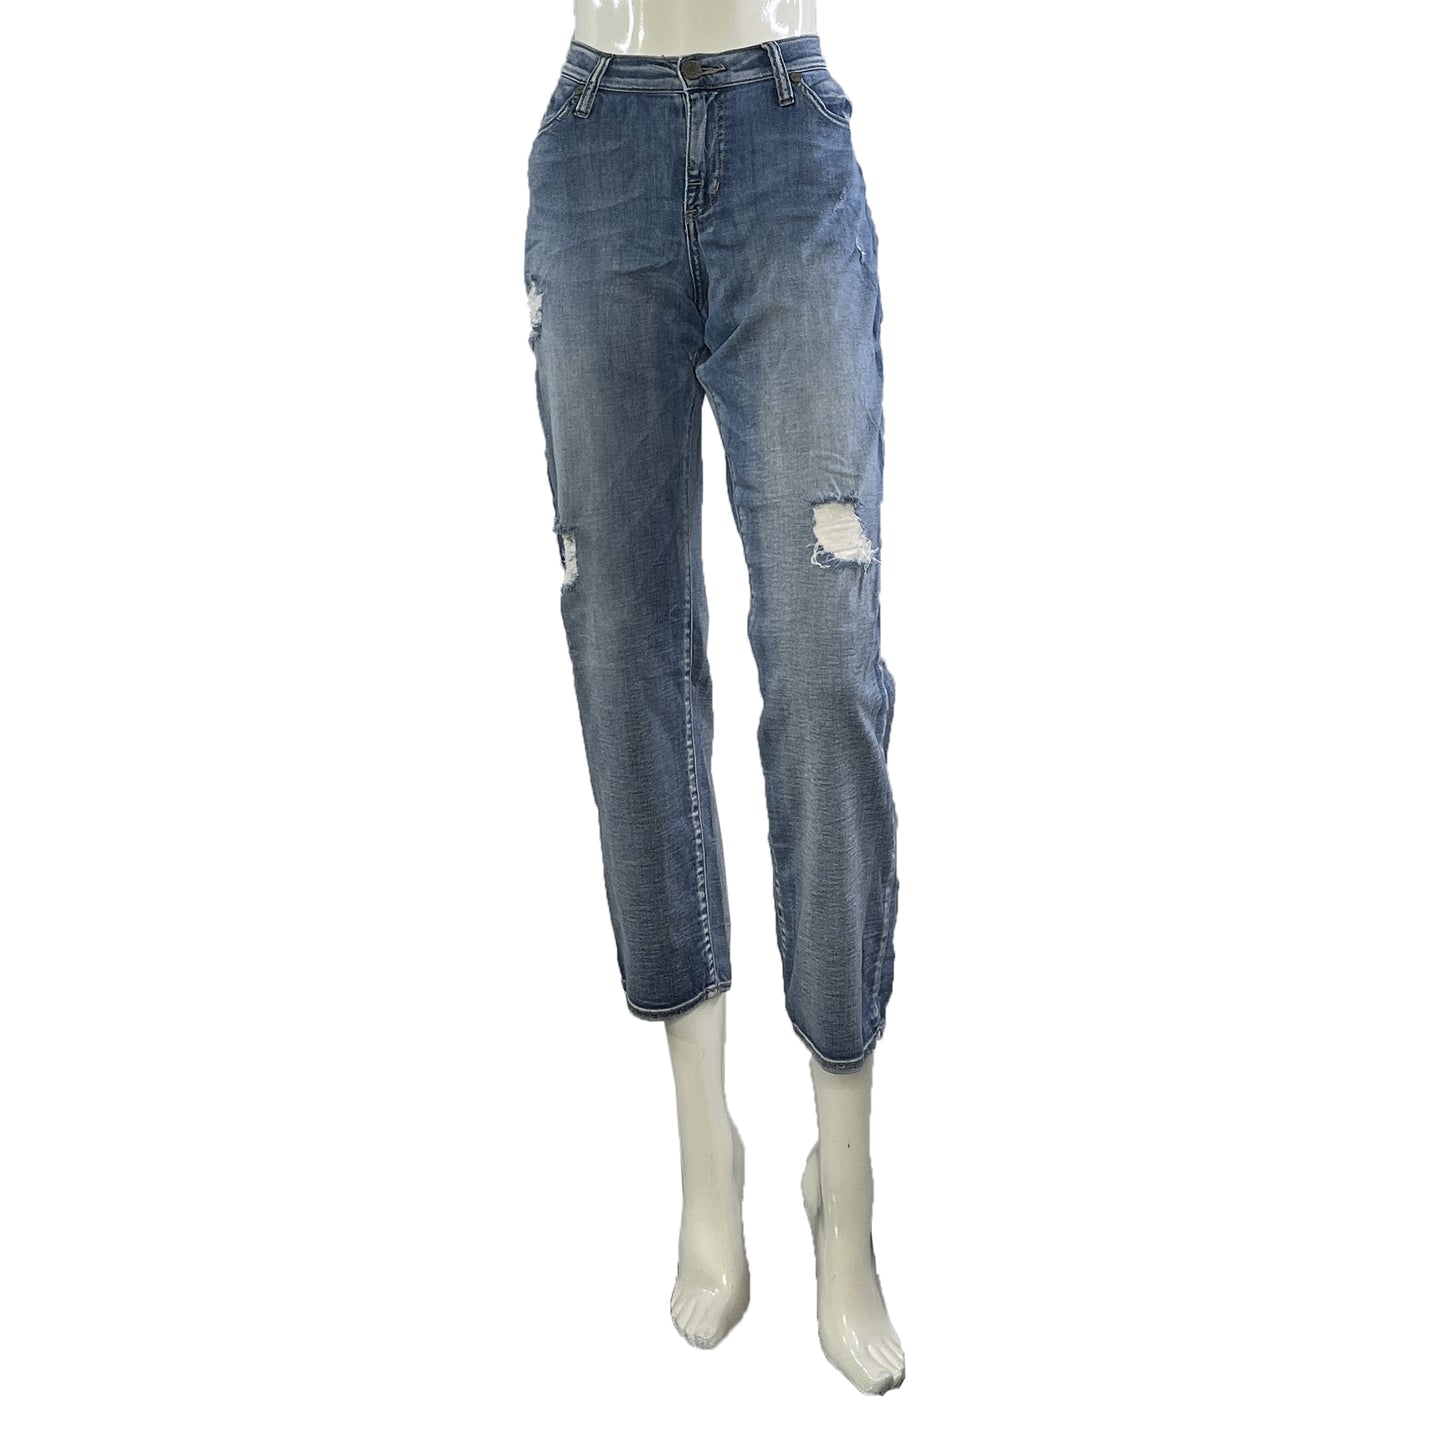 Rock & Republic Denim Jeans w Rip Details Light Blue Size 12 SKU 000021-3